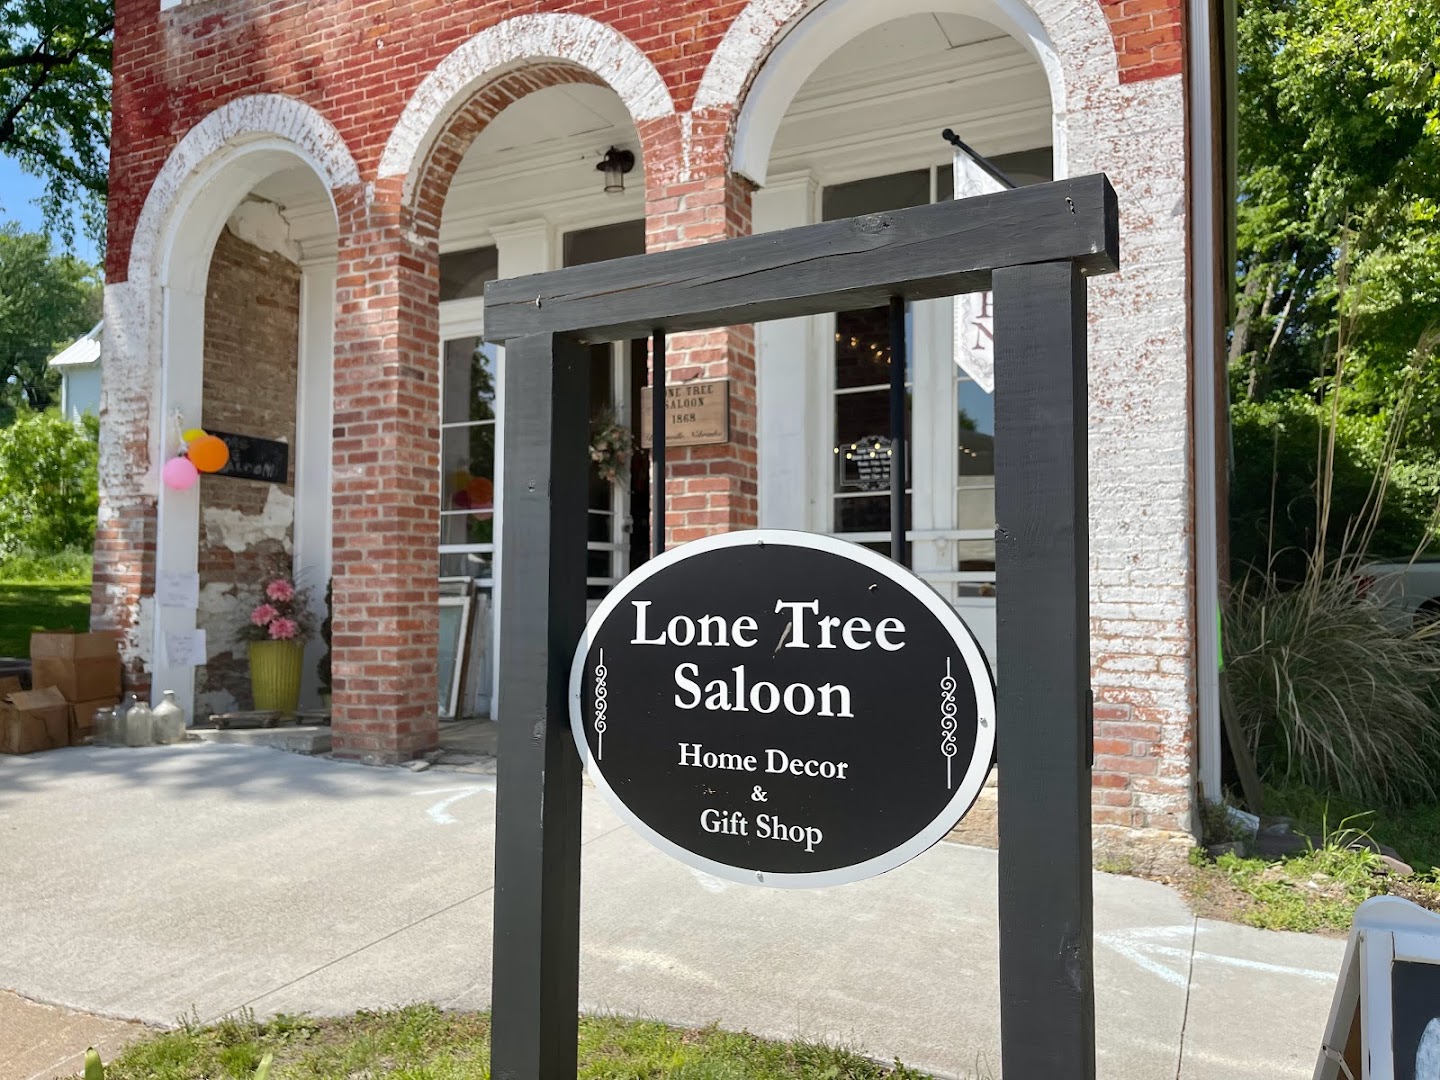 Lone Tree Saloon Home Decor & Gift Shop